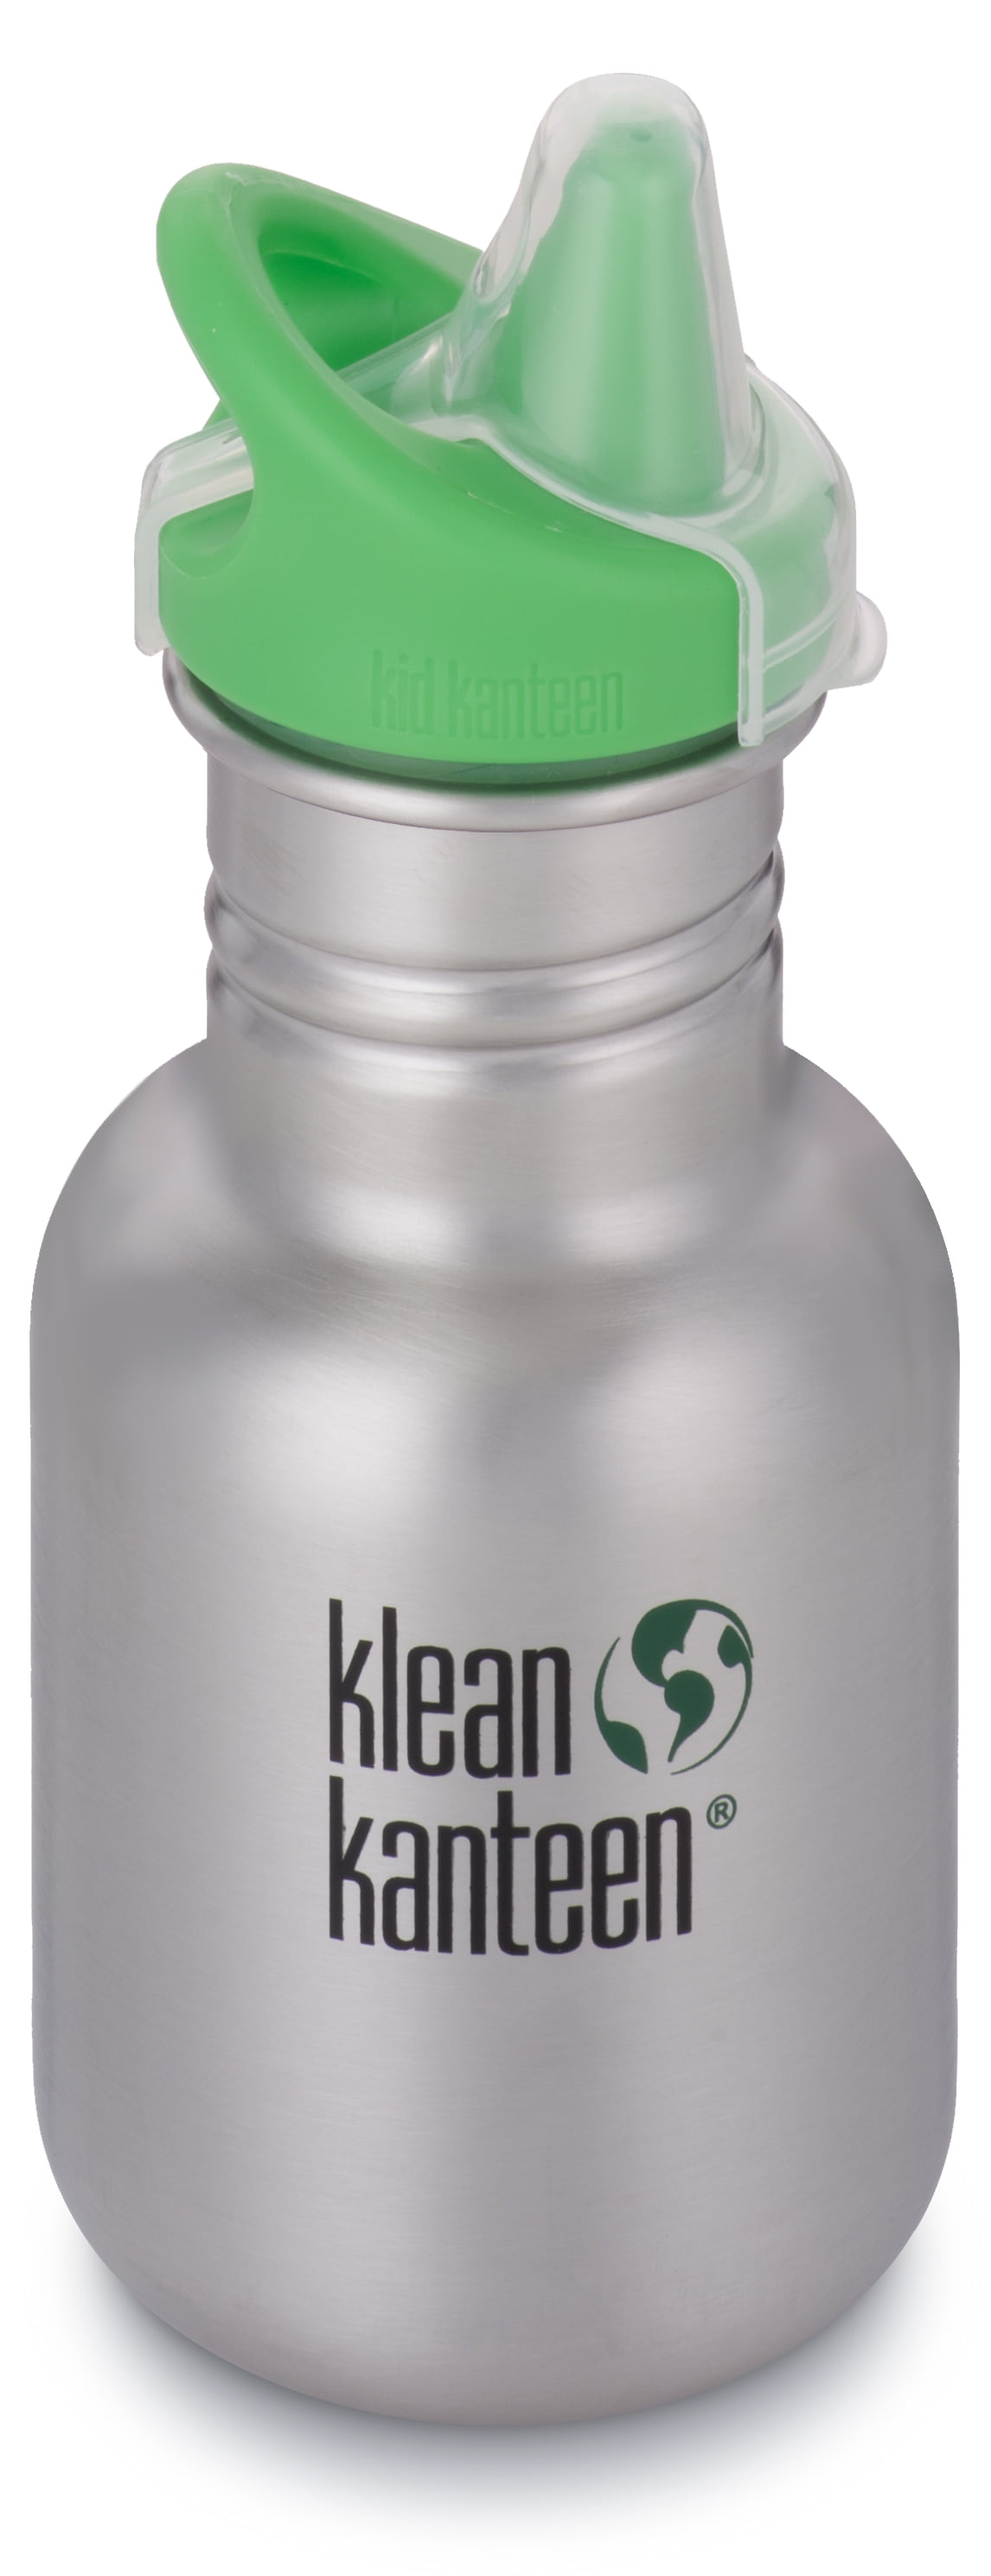 Klean Kanteen Stainless Steel 12oz Kid Kanteen Water Bottle with Sippy Klean Kanteen 12 Oz Stainless Steel Water Bottle